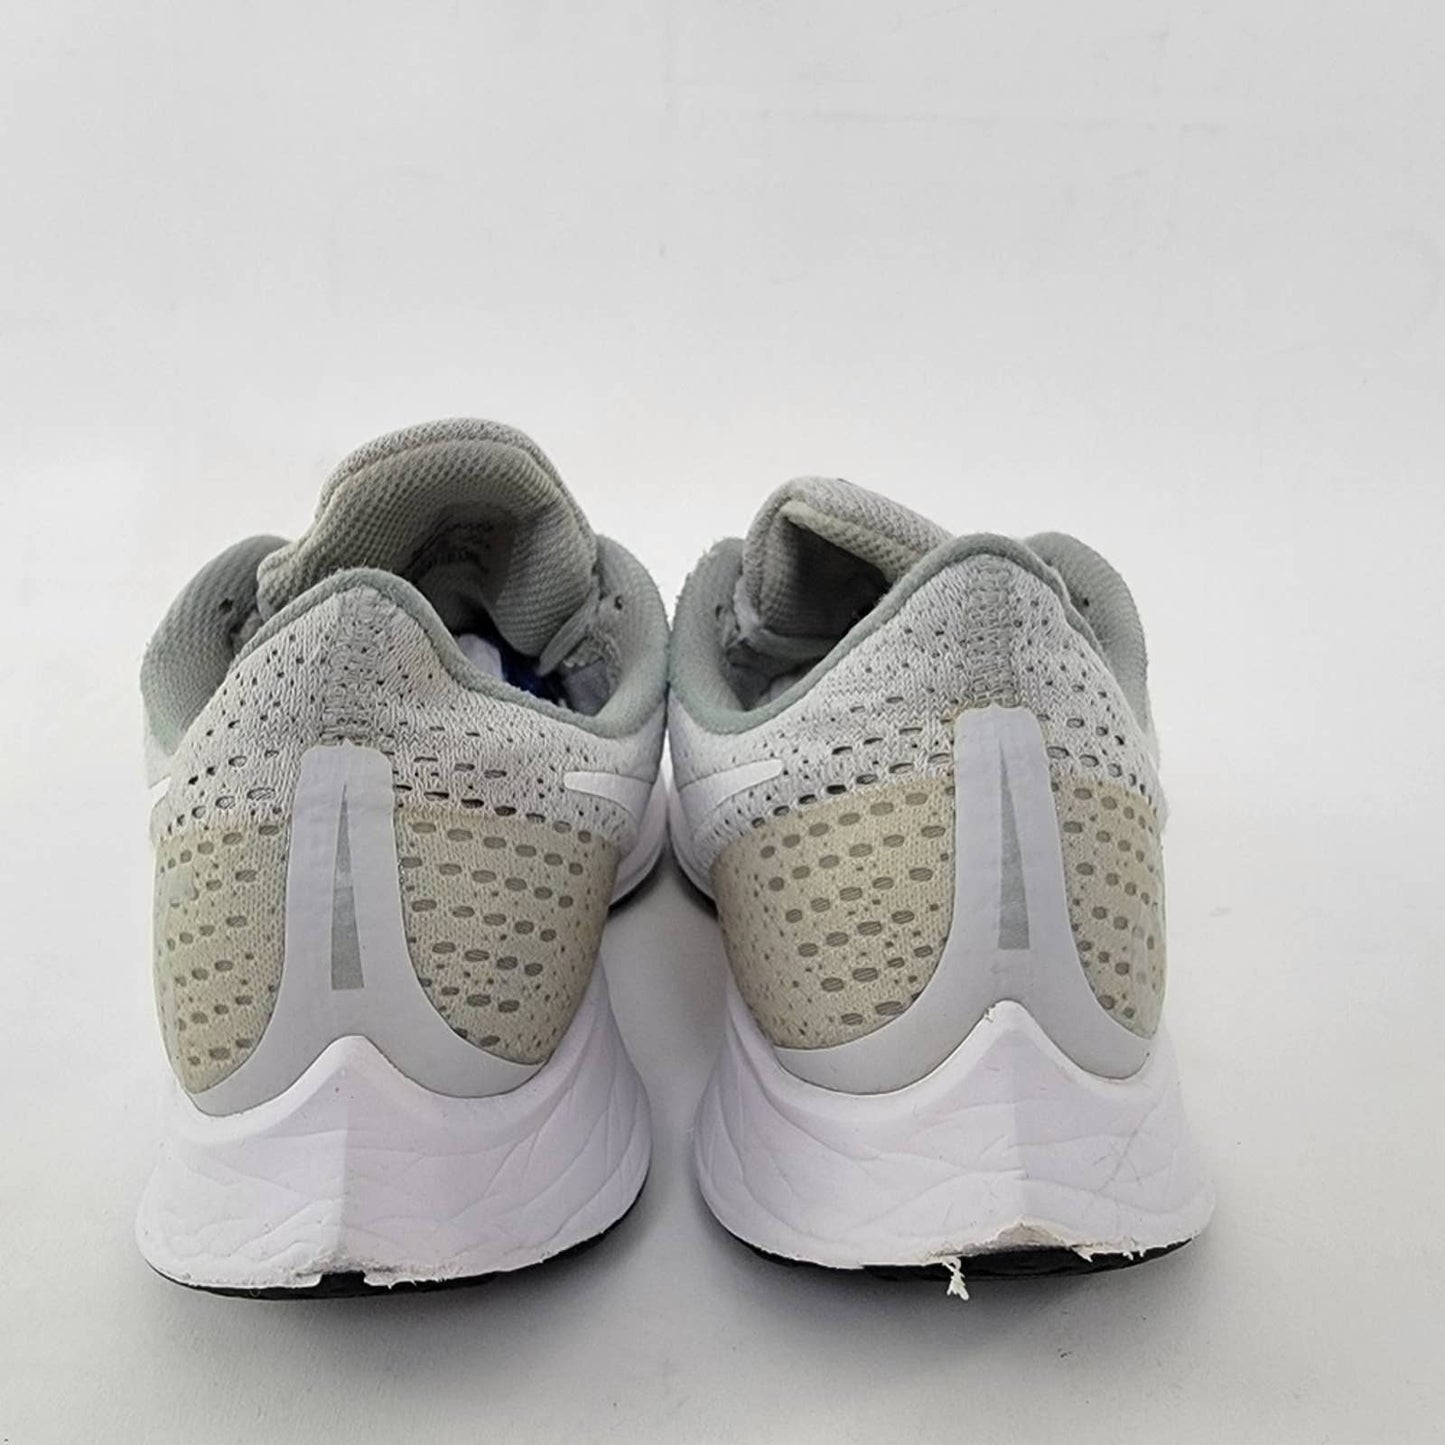 Nike Air Zoom Pegasus 35 Running Shoes - 7